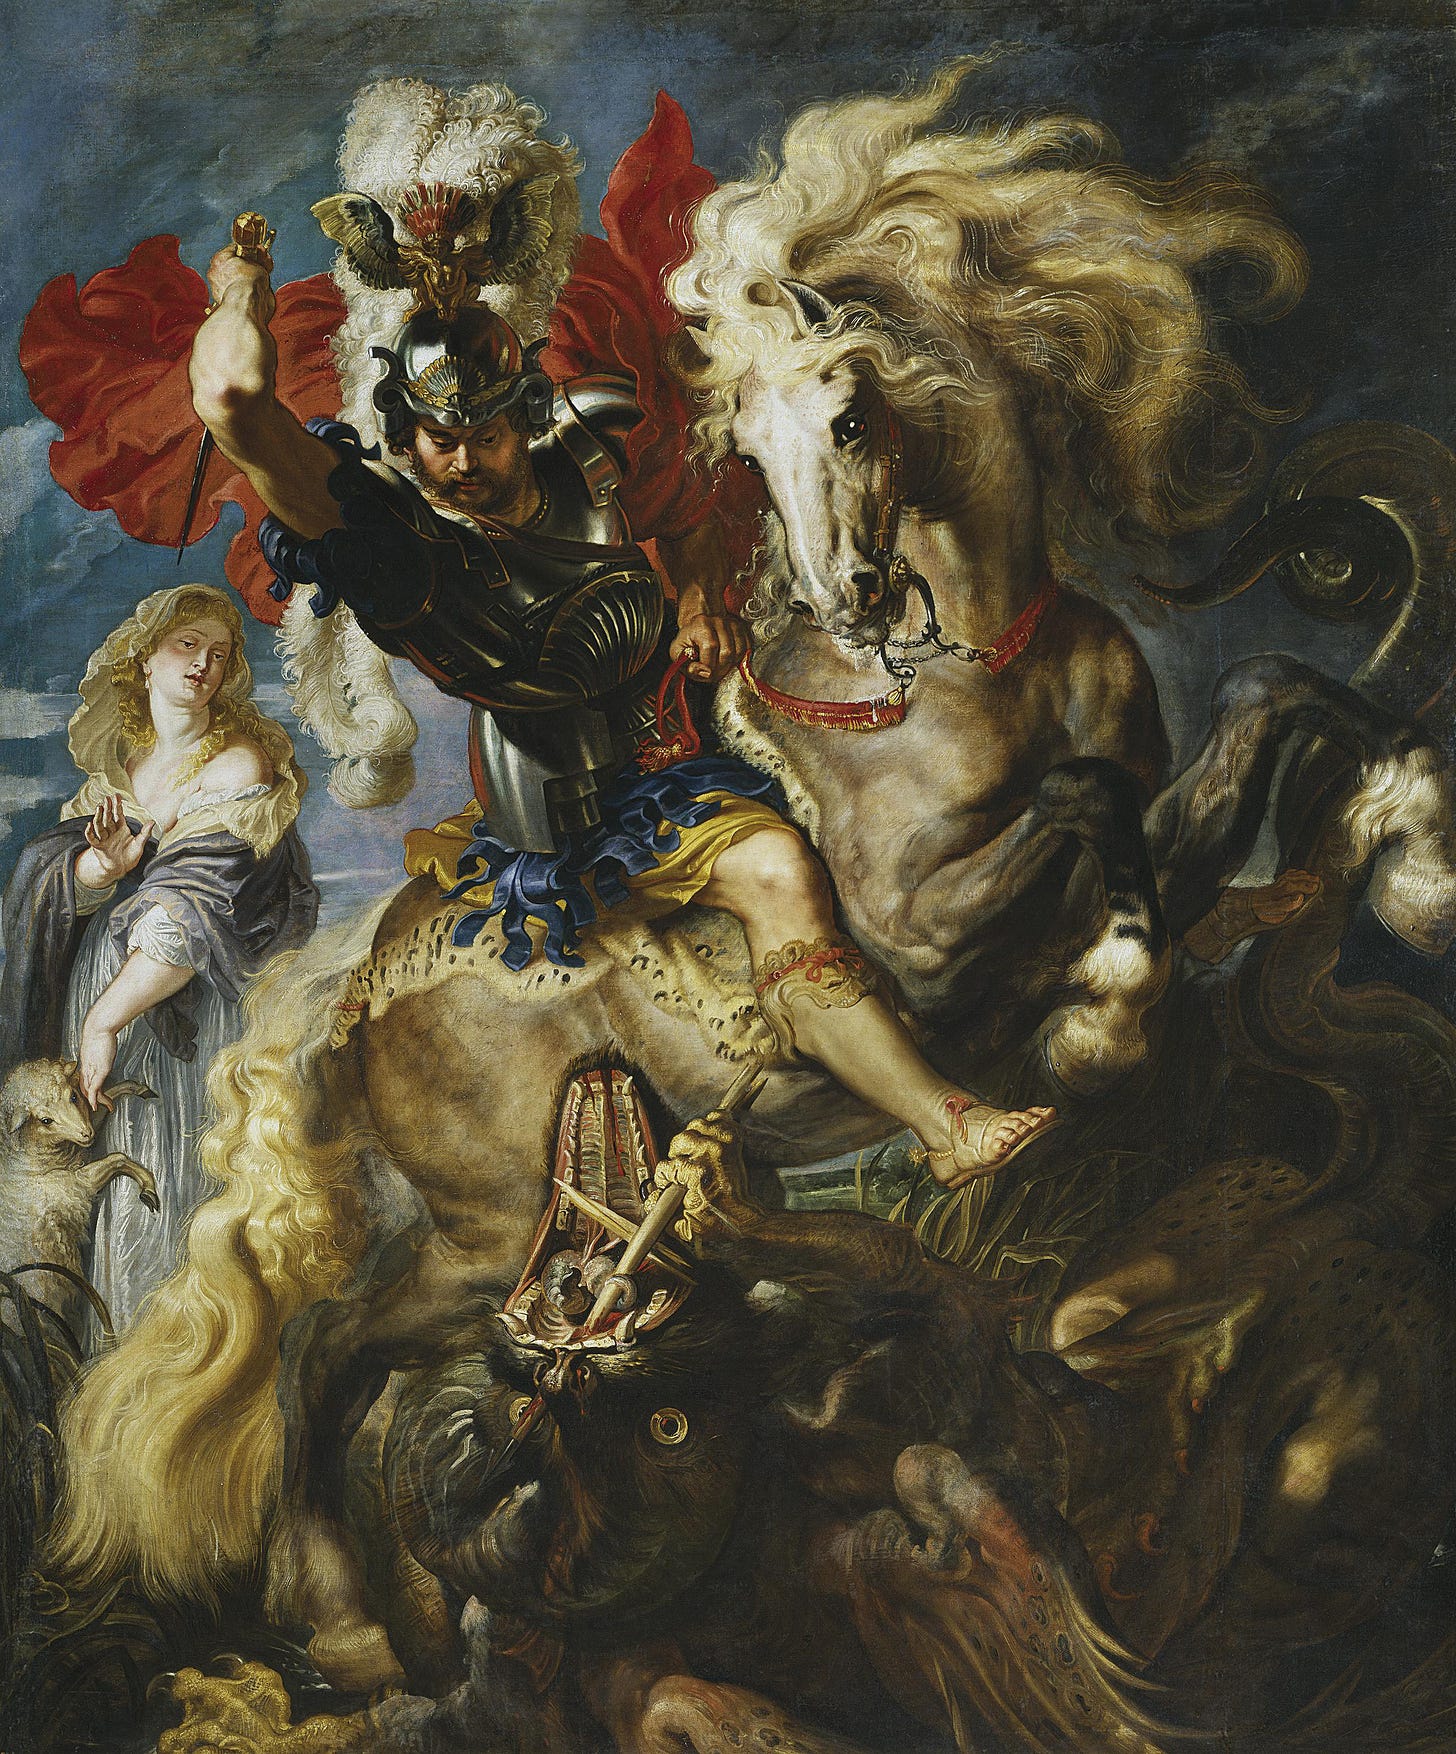 Saint George and the Dragon (Rubens) - Wikipedia